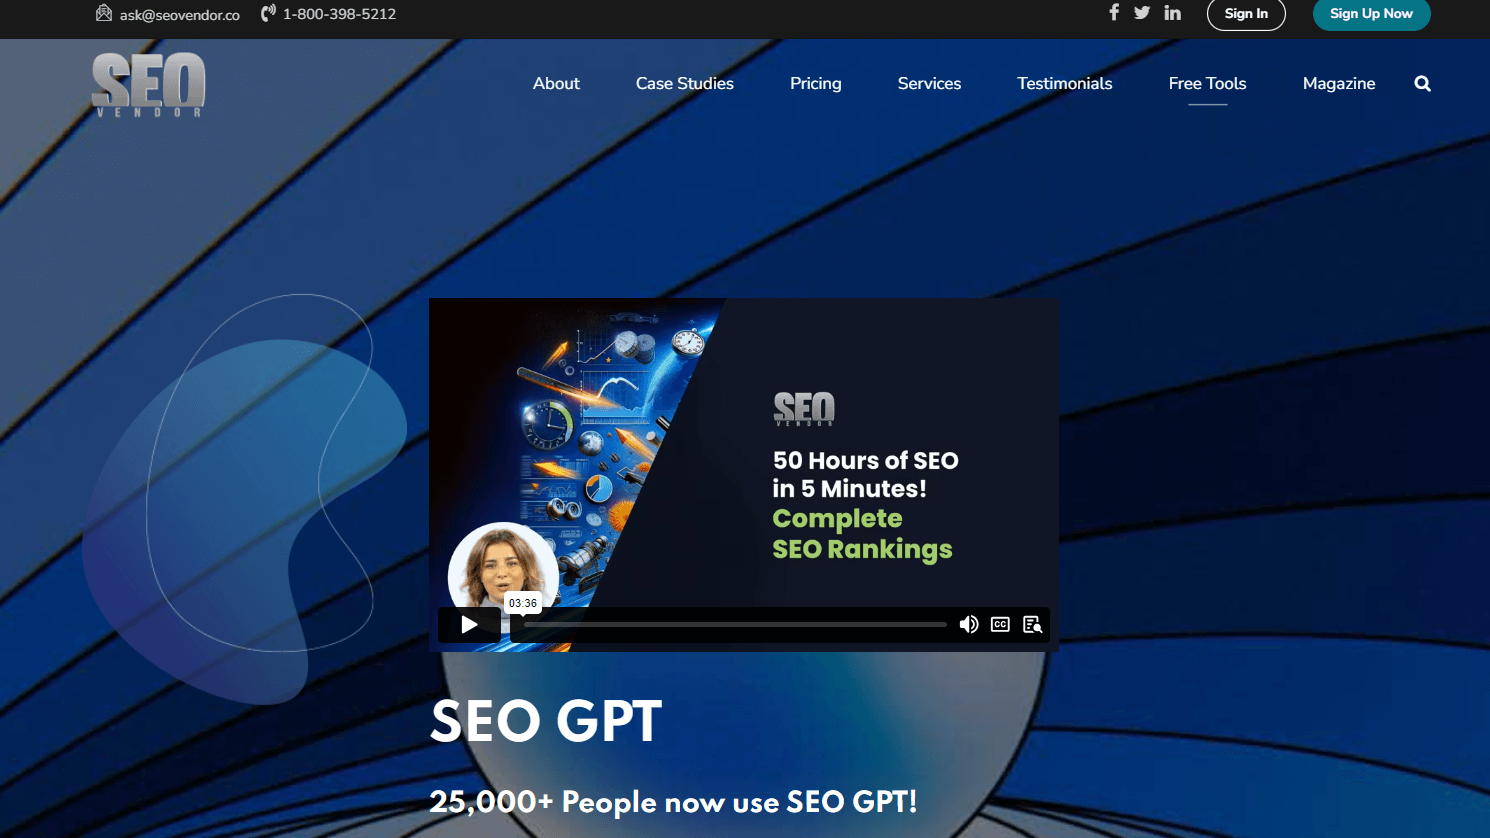 SEO GPT - SEO-Optimized Content Generation